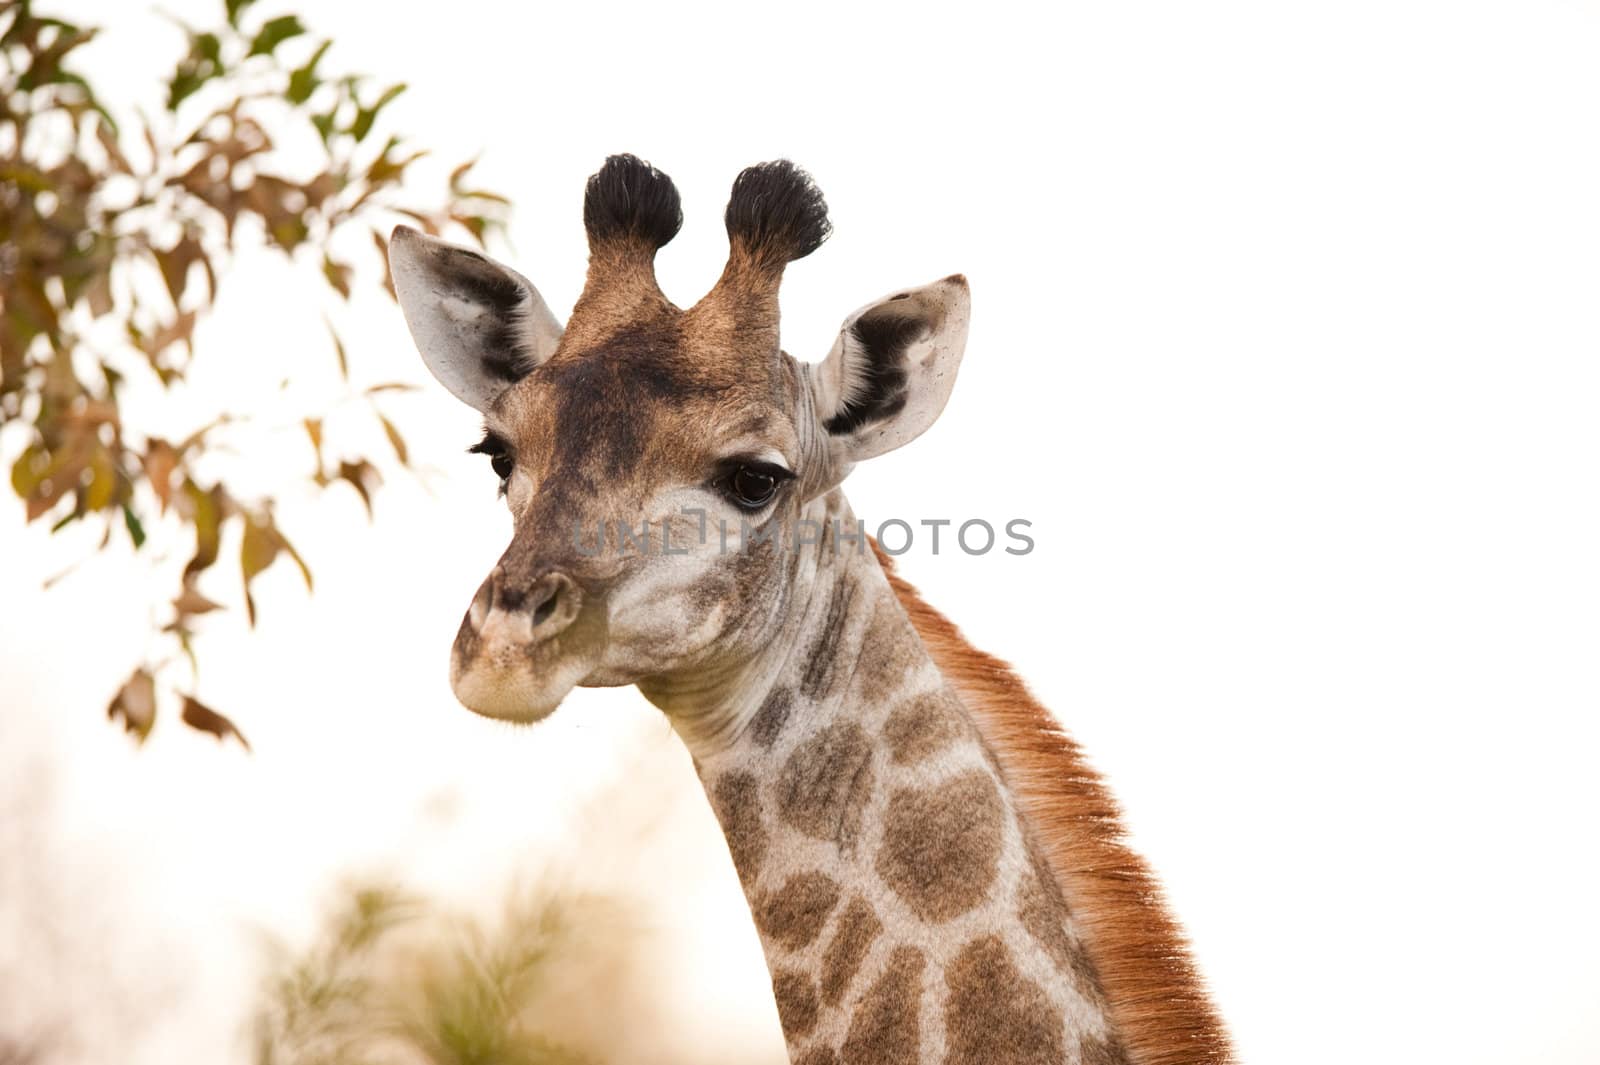 GIRAFFE (Giraffa camelopardalis) in the bush, South Africa